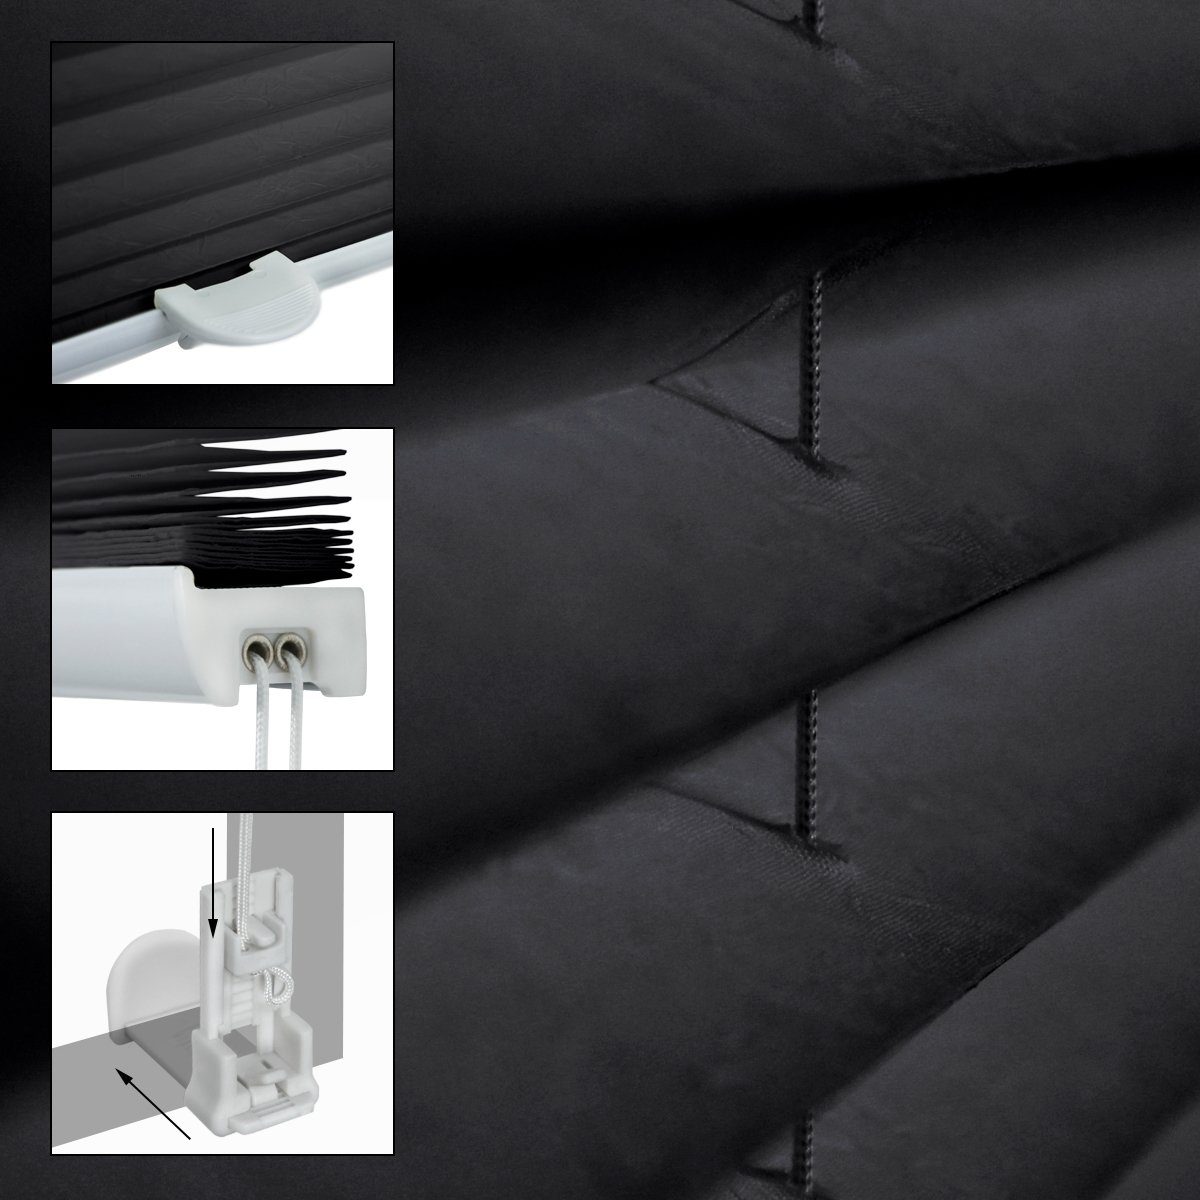 Plissee schwarz, 45x150 cm, Klemmfix, Schwarz ECD Germany, 45x150cm Befestigungsmaterial, mit Klemmfix ohne inkl. Klemmträger EasyFix Bohren